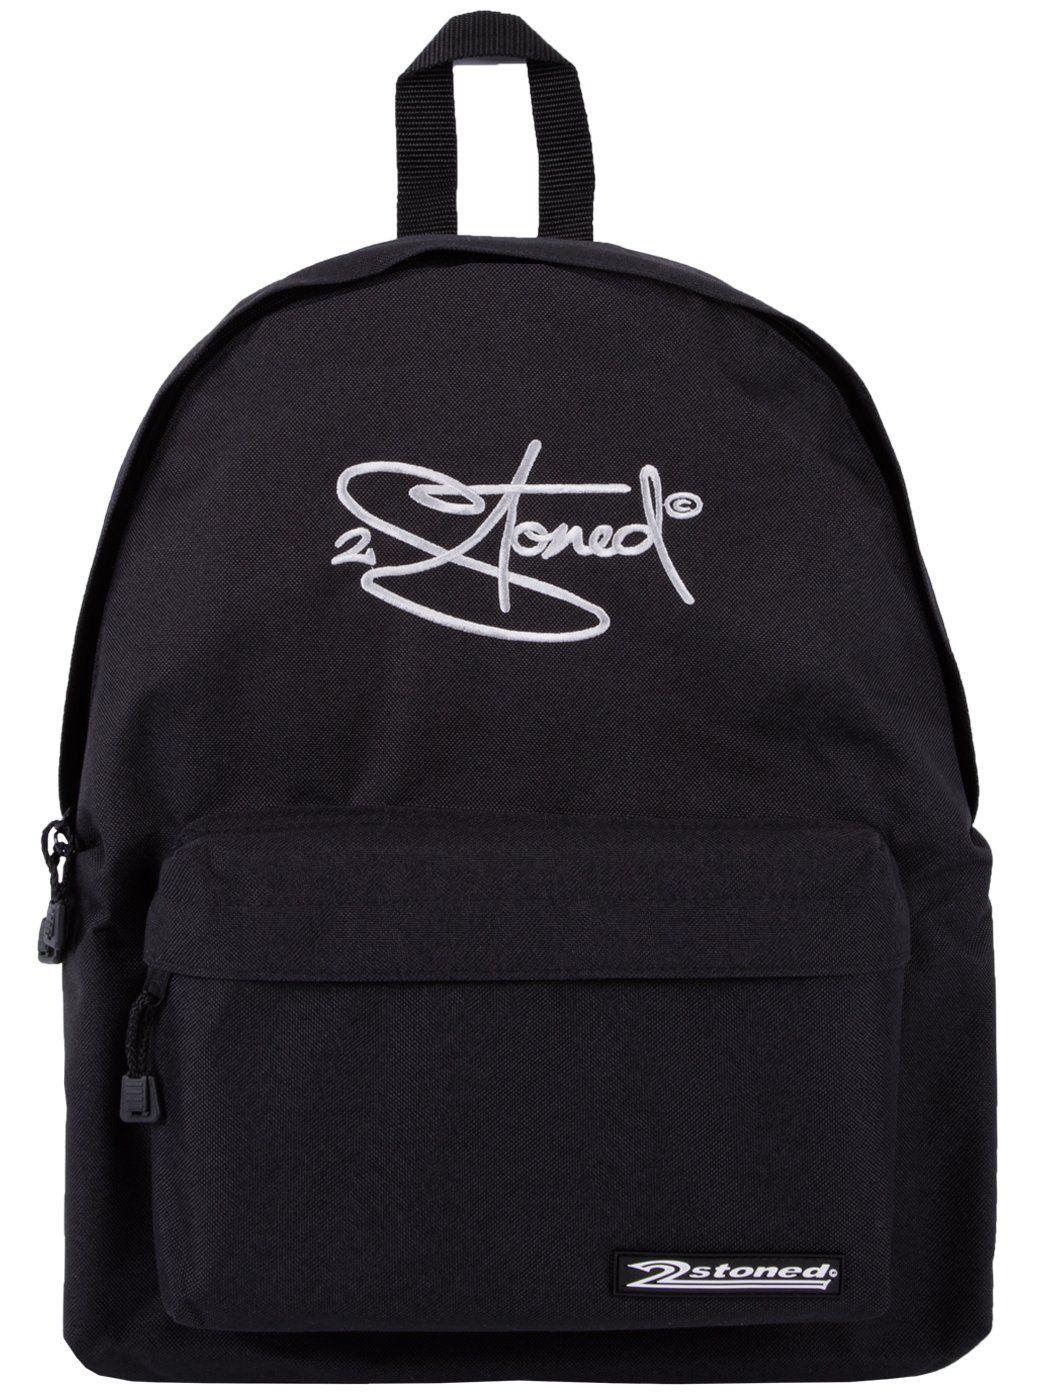 Rucksack Classic Backpack von 2Stoned